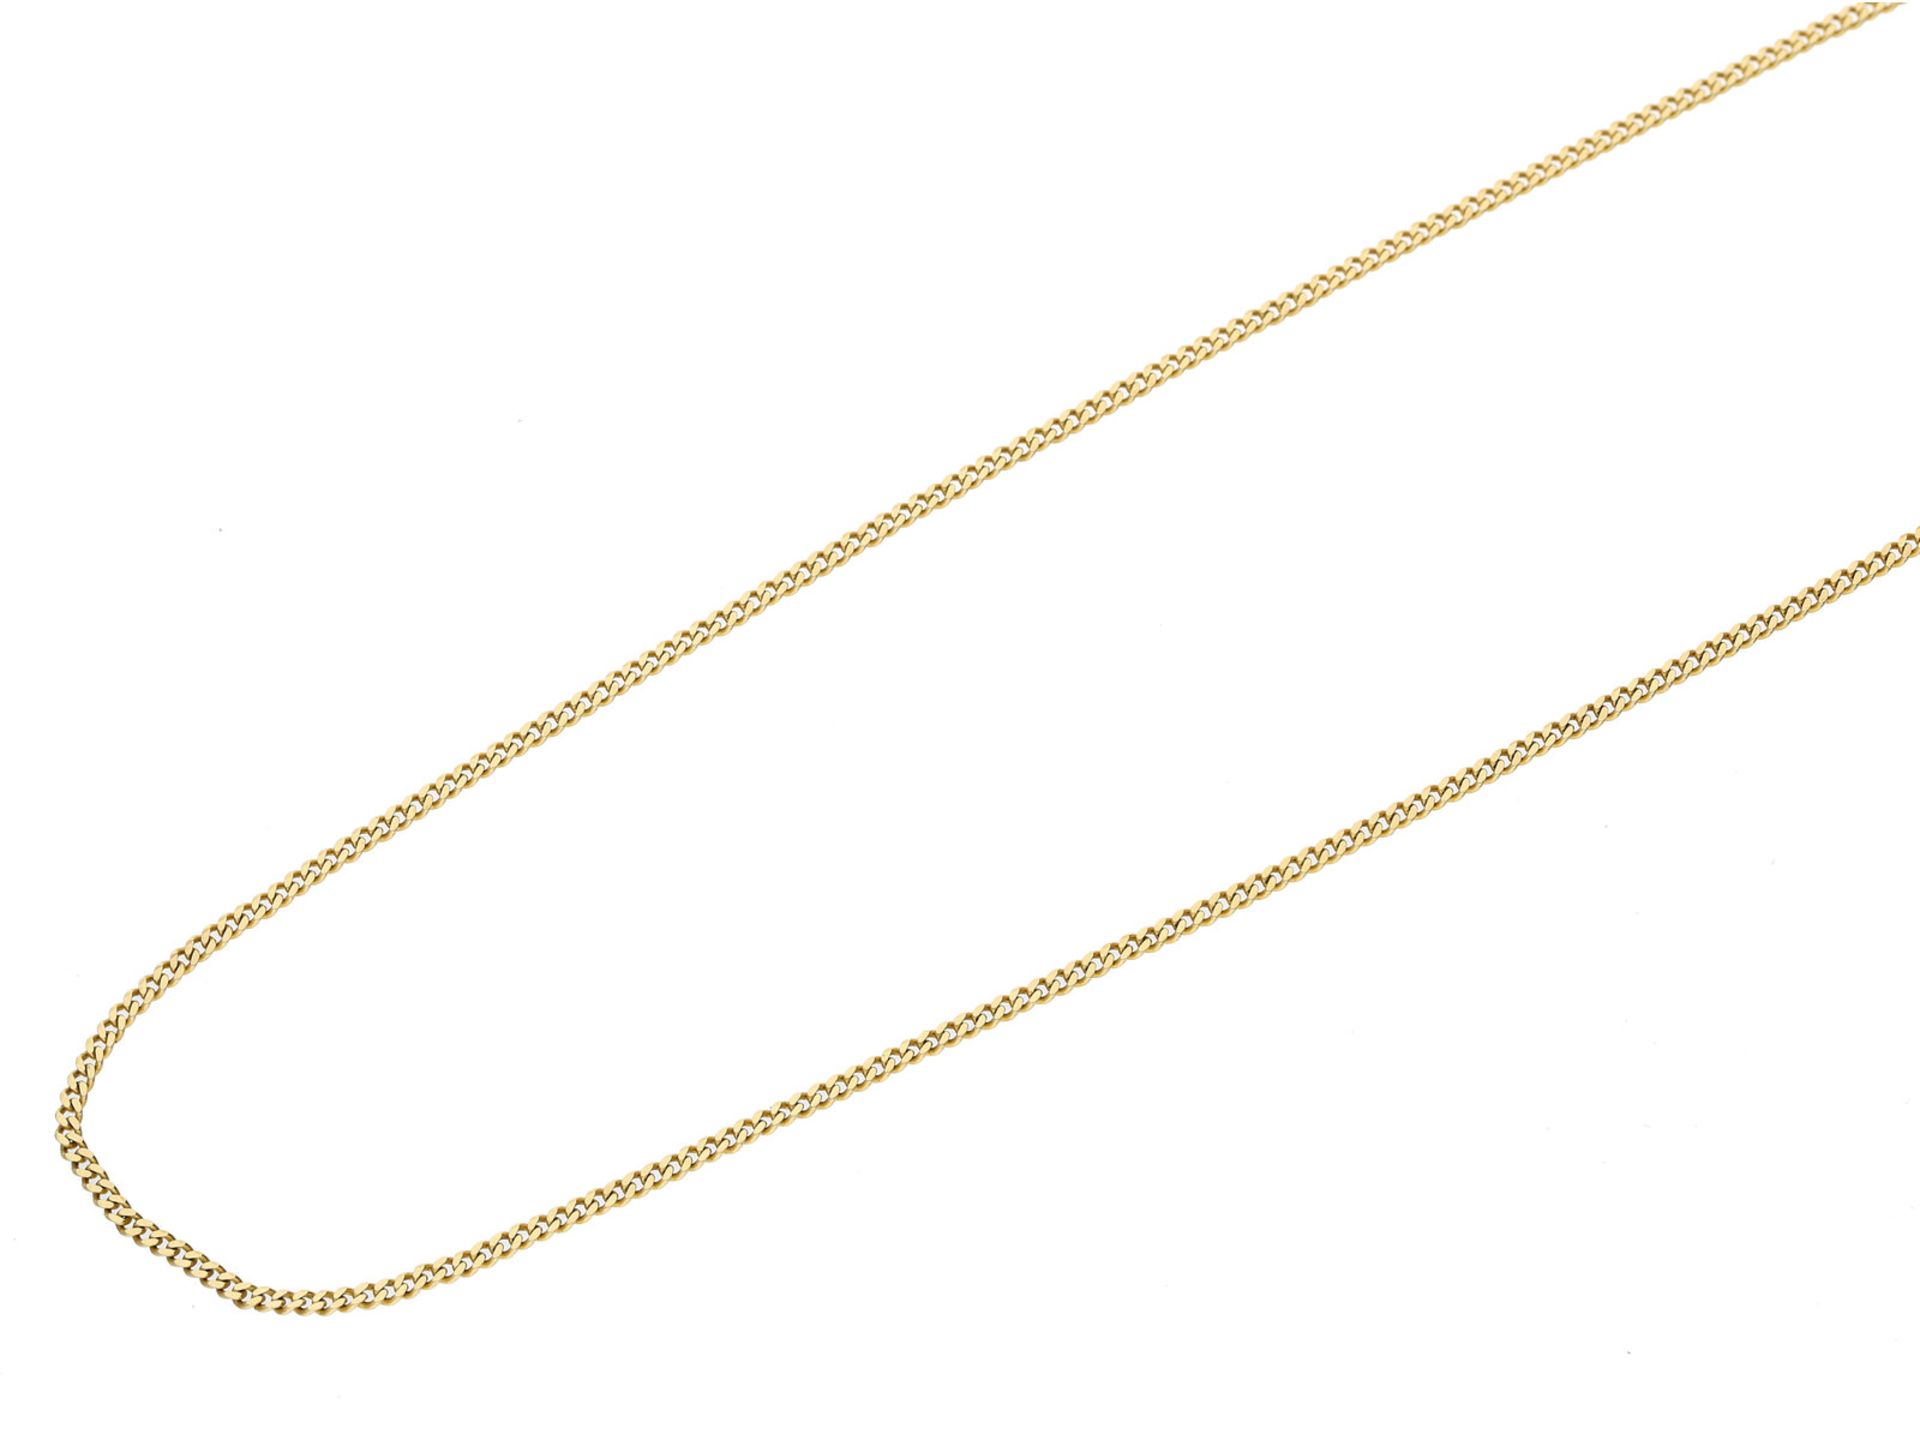 Kette/Collier: feine goldene Collierkette: Ca. 47cm lang, ca. 4,3g, 14K Gold, feine Collierkette